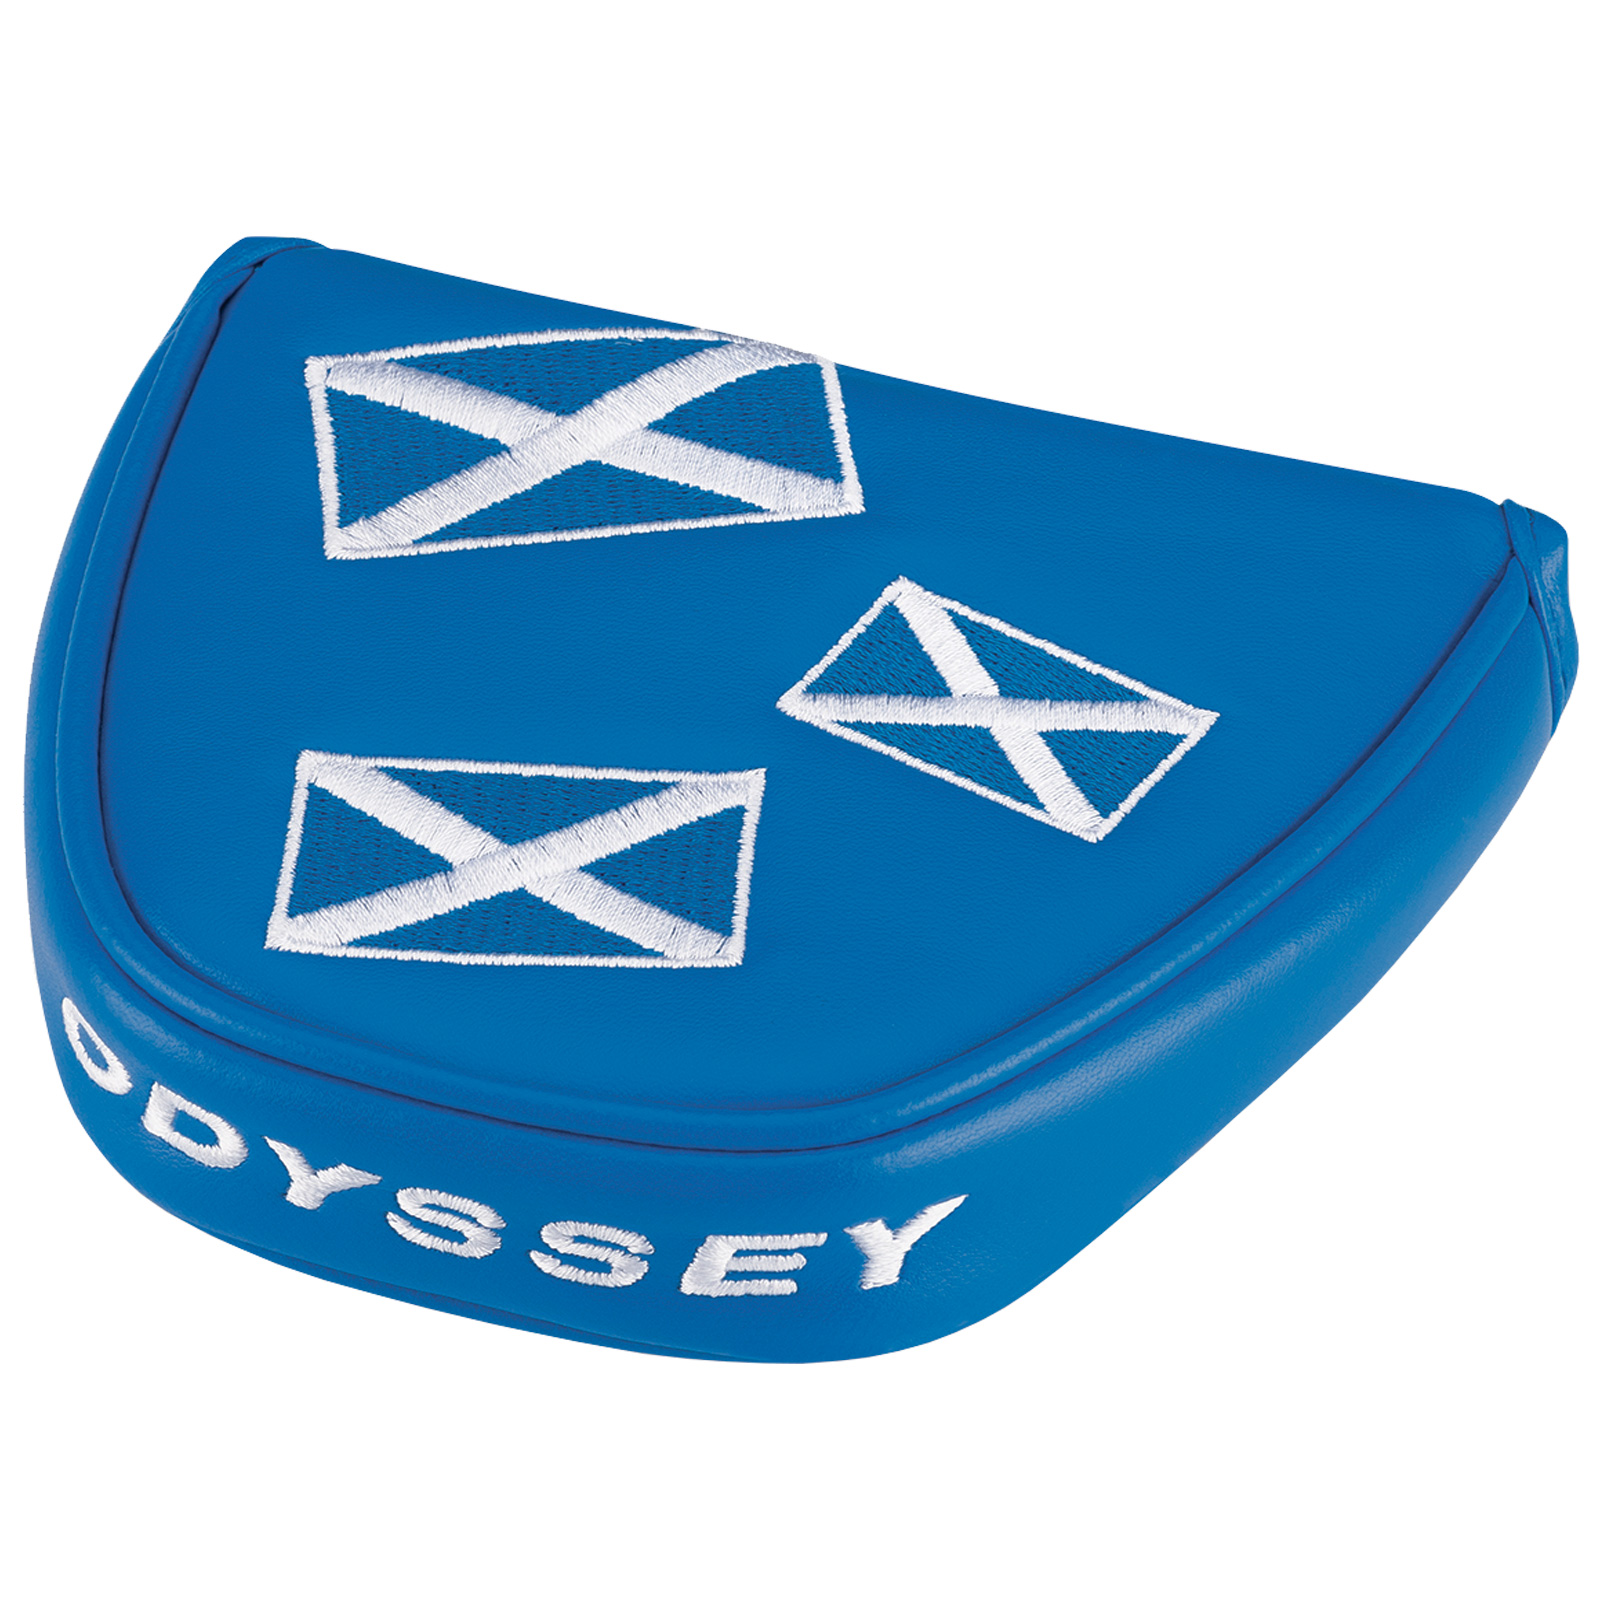 odyssey golf putter headcovers